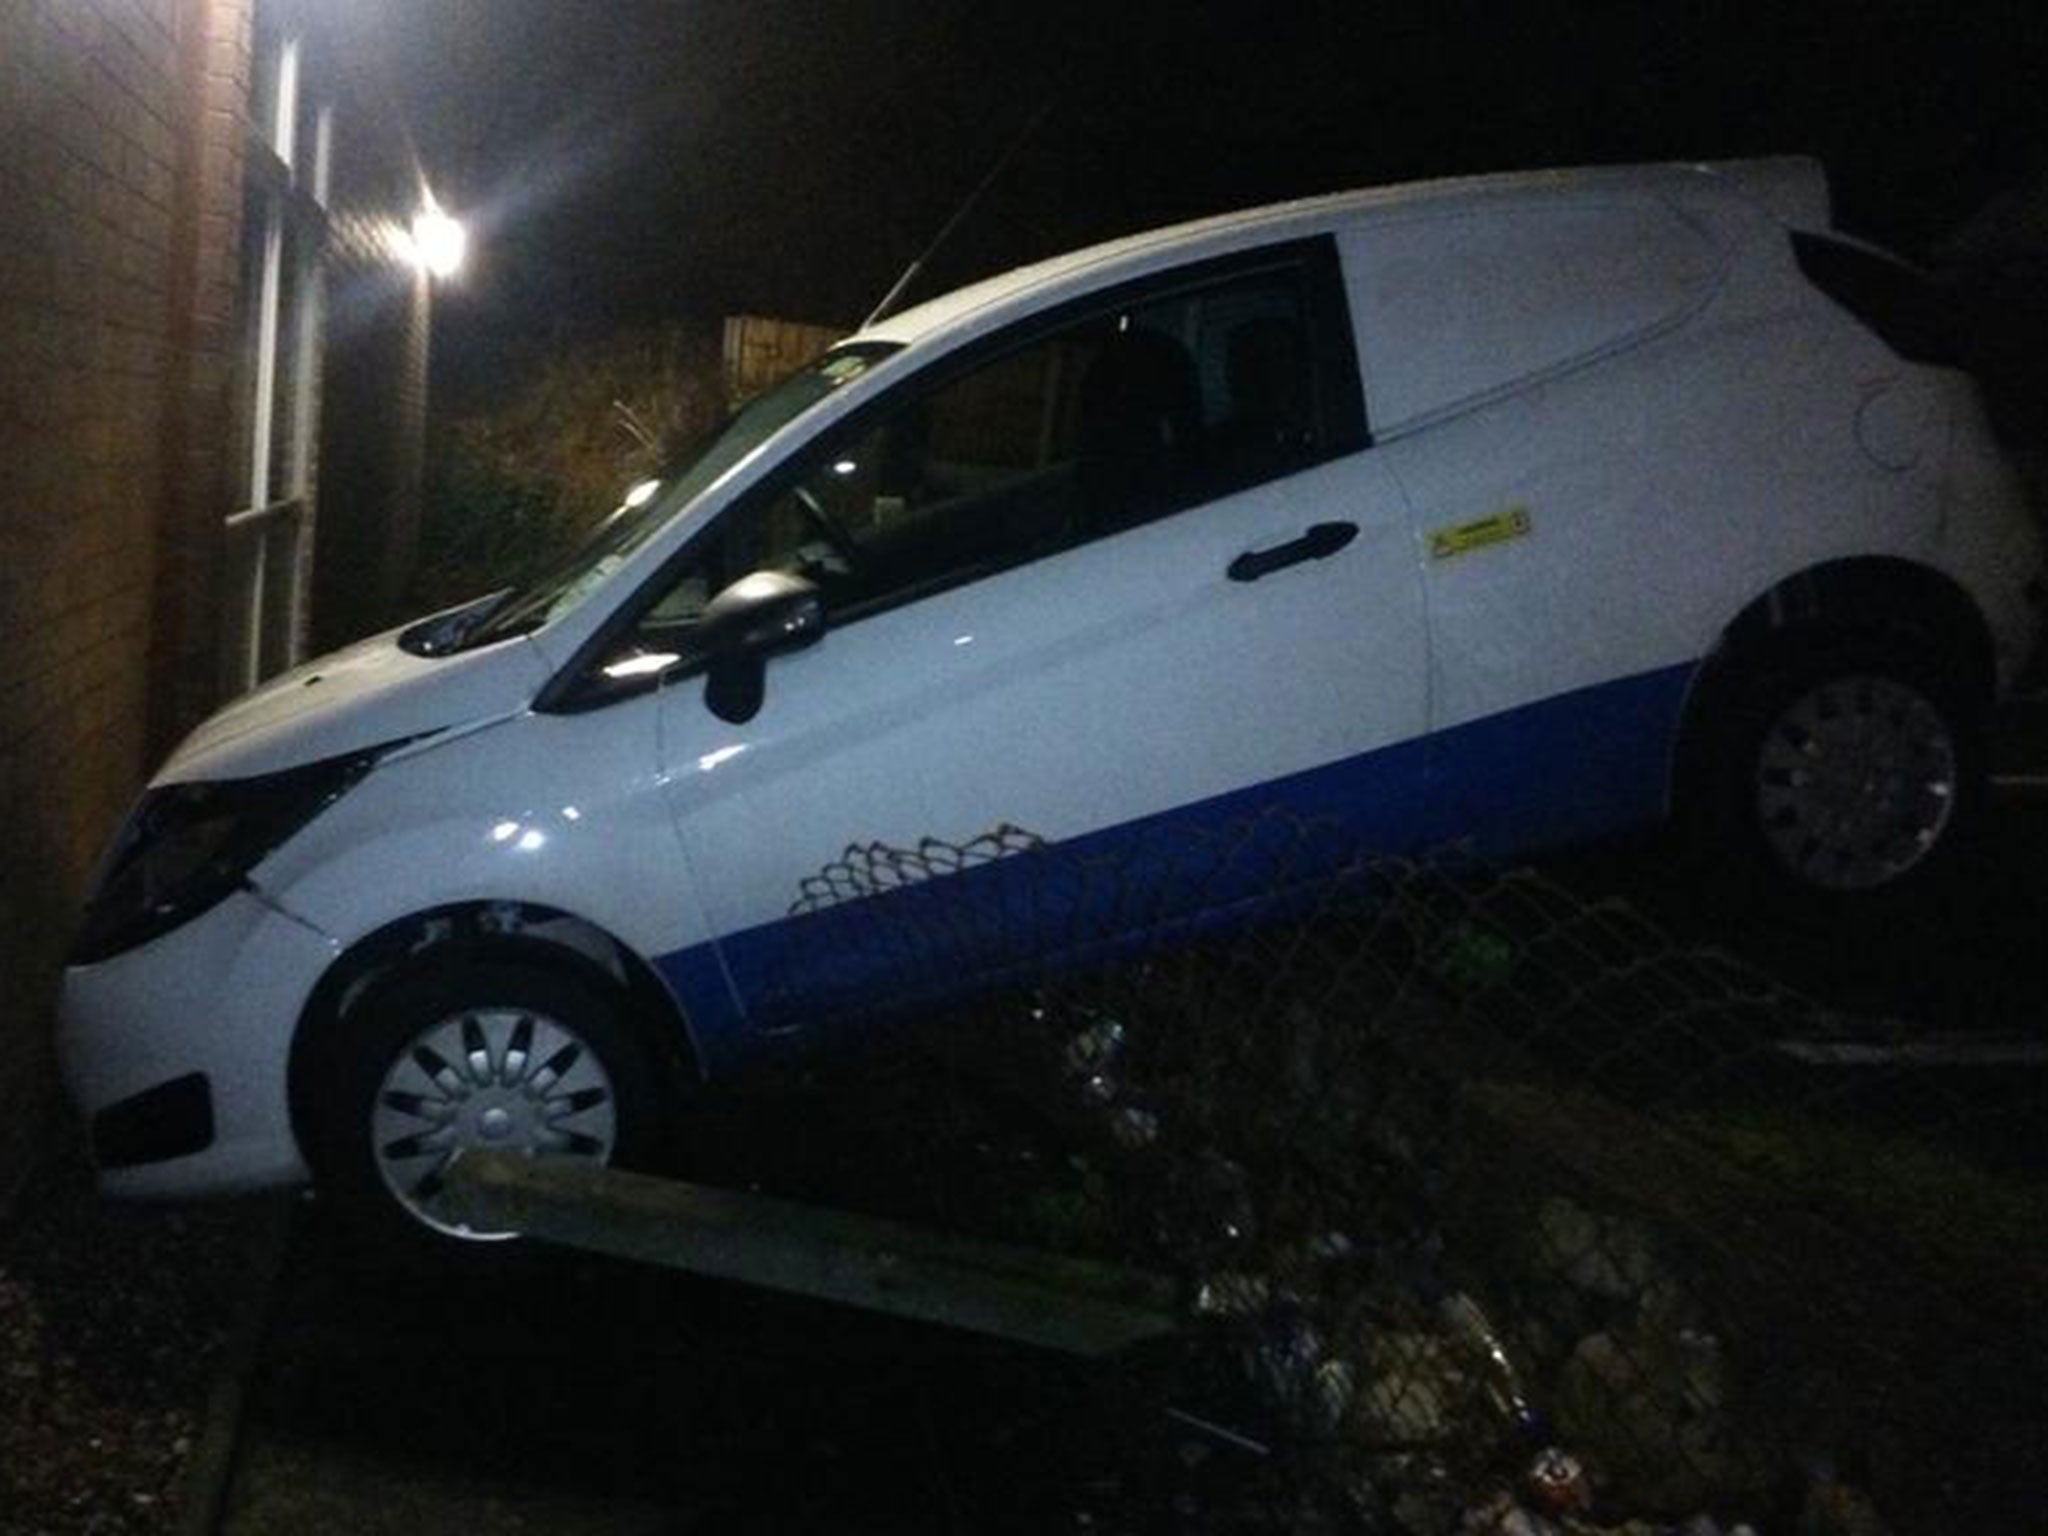 The crash at Frodsham police station on 2 January